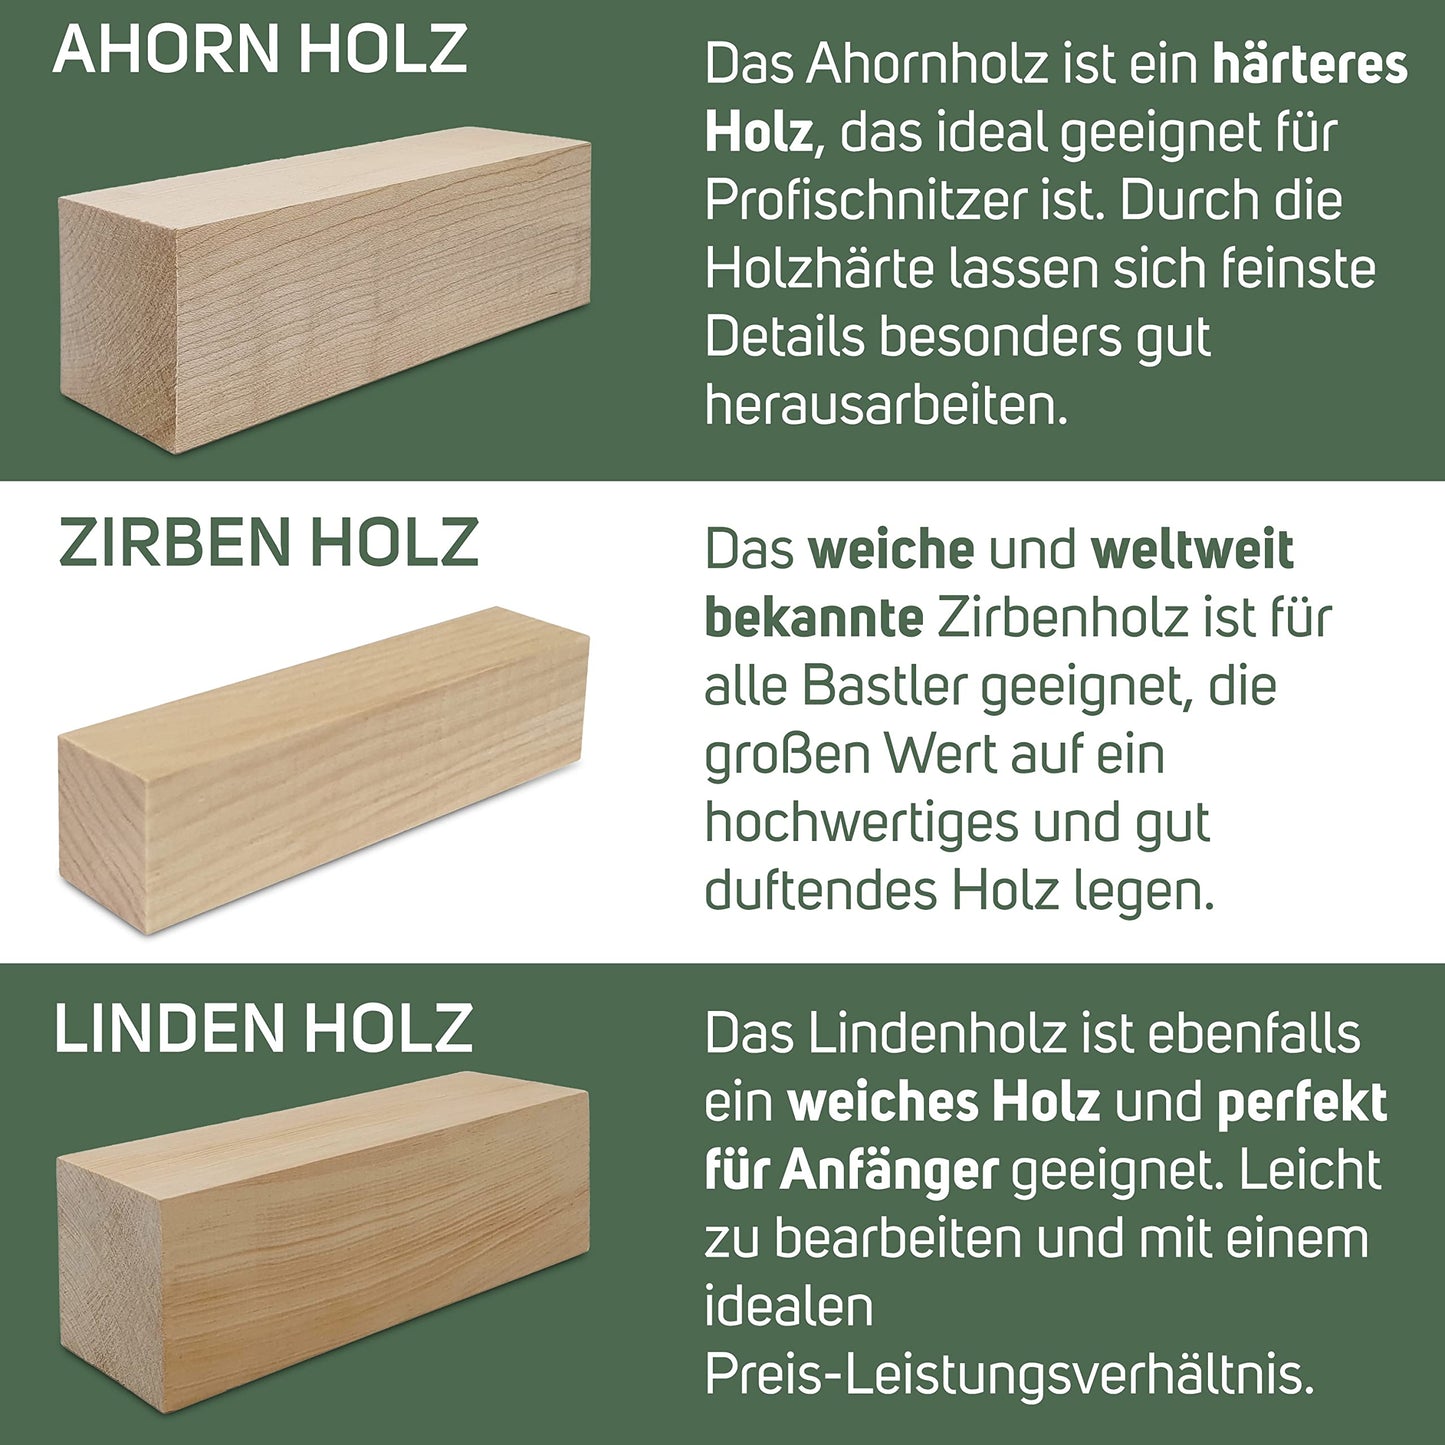 Zirbenholz Block zum drechseln und schnitzen Drechselholz Rohlinge Schnitzholz aus Zirbe - Drechselholz Rohlinge aus Zirbenholz zugeschnitten und gehobelt (40 x 13 x 7 cm)